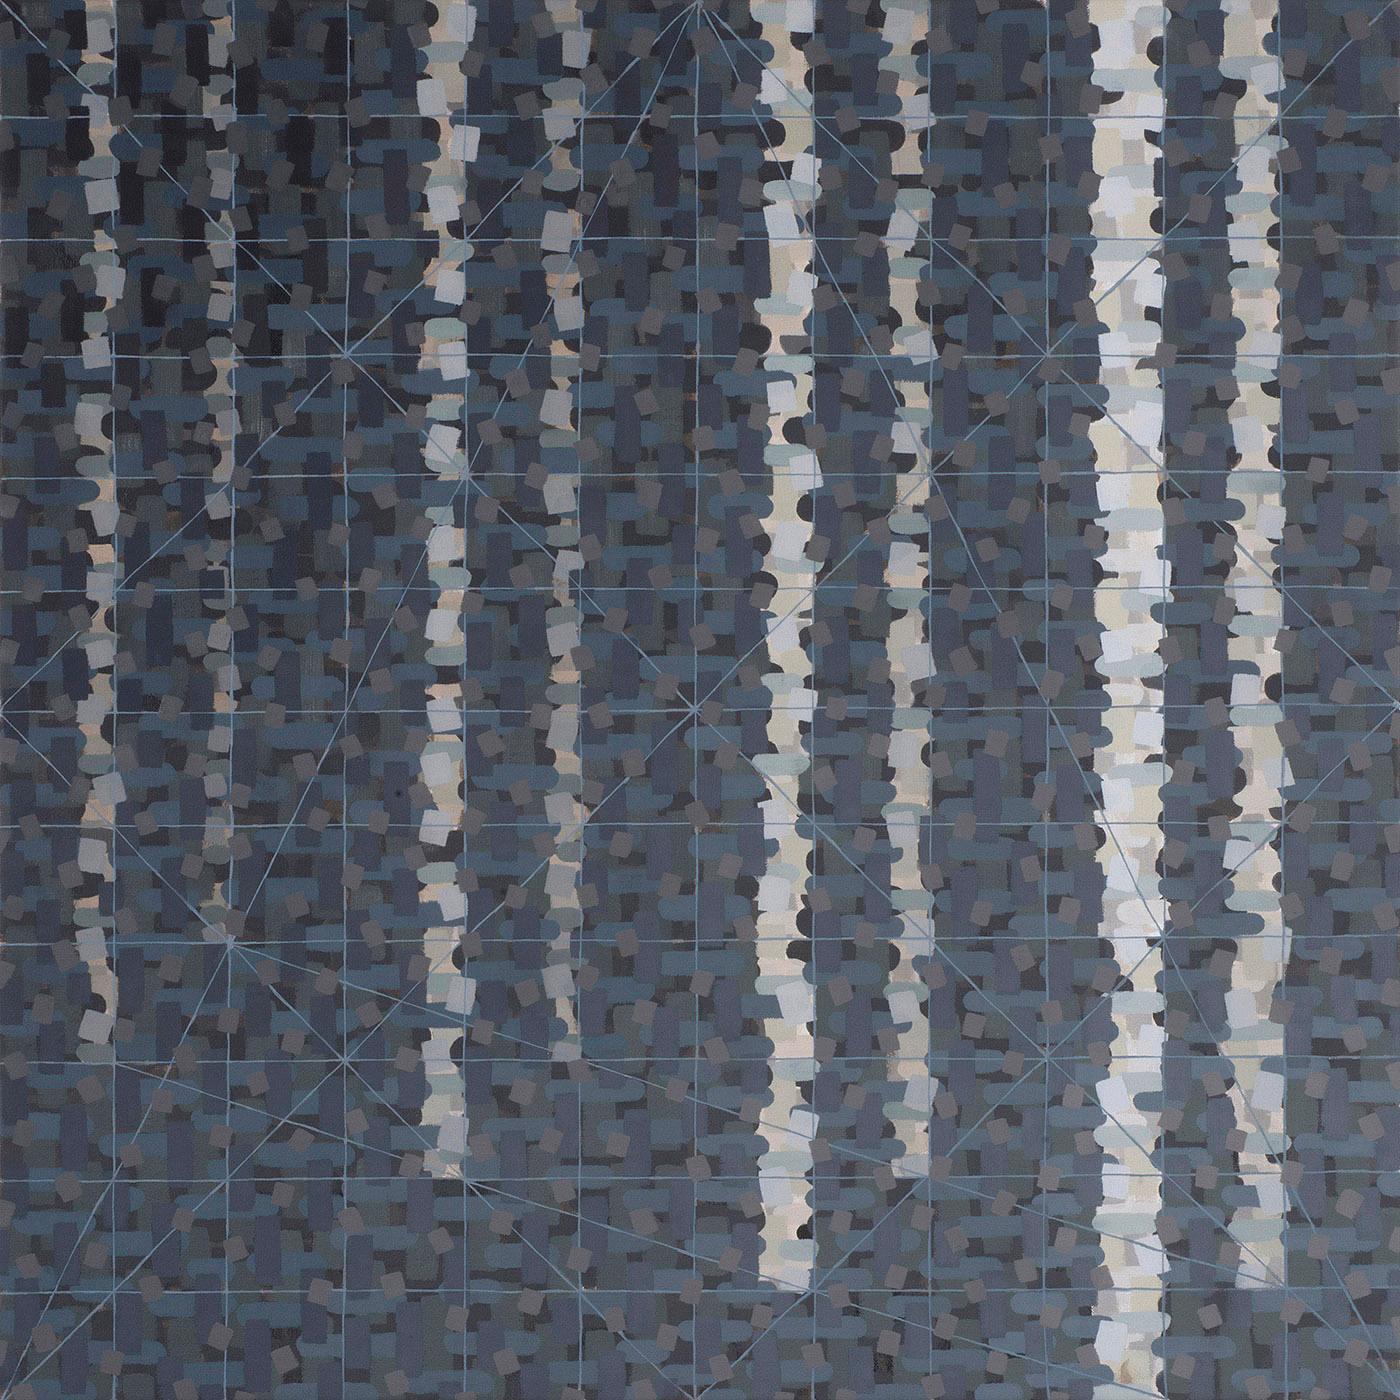 Rachael Wren Landscape Painting - "Elegy", oil painting on linen, geometric abstraction, grey, silver, black, blue